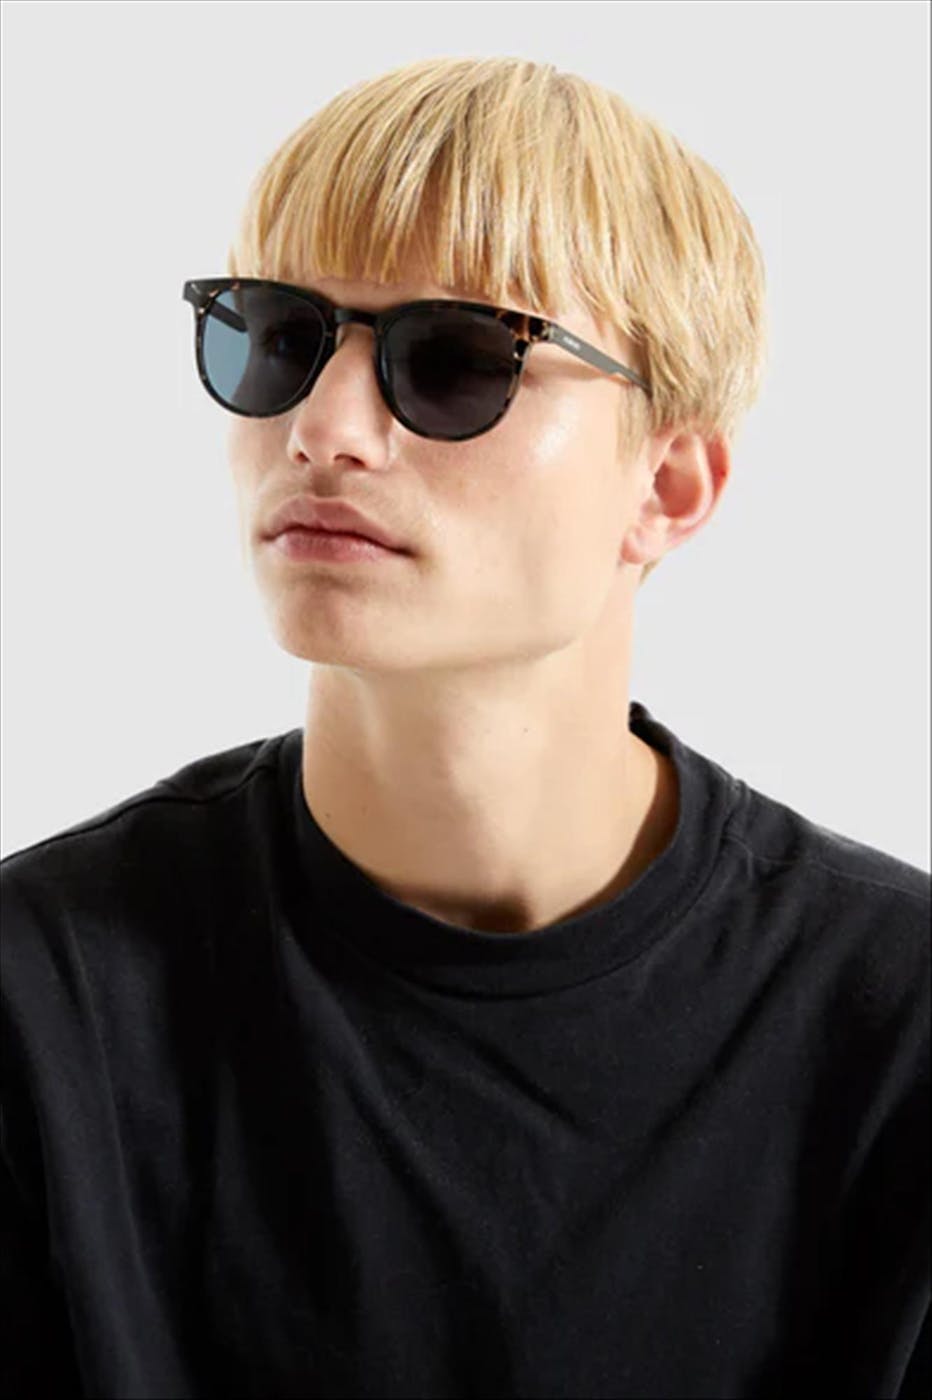 Komono - Zwarte Francis Metal Dusk zonnebril